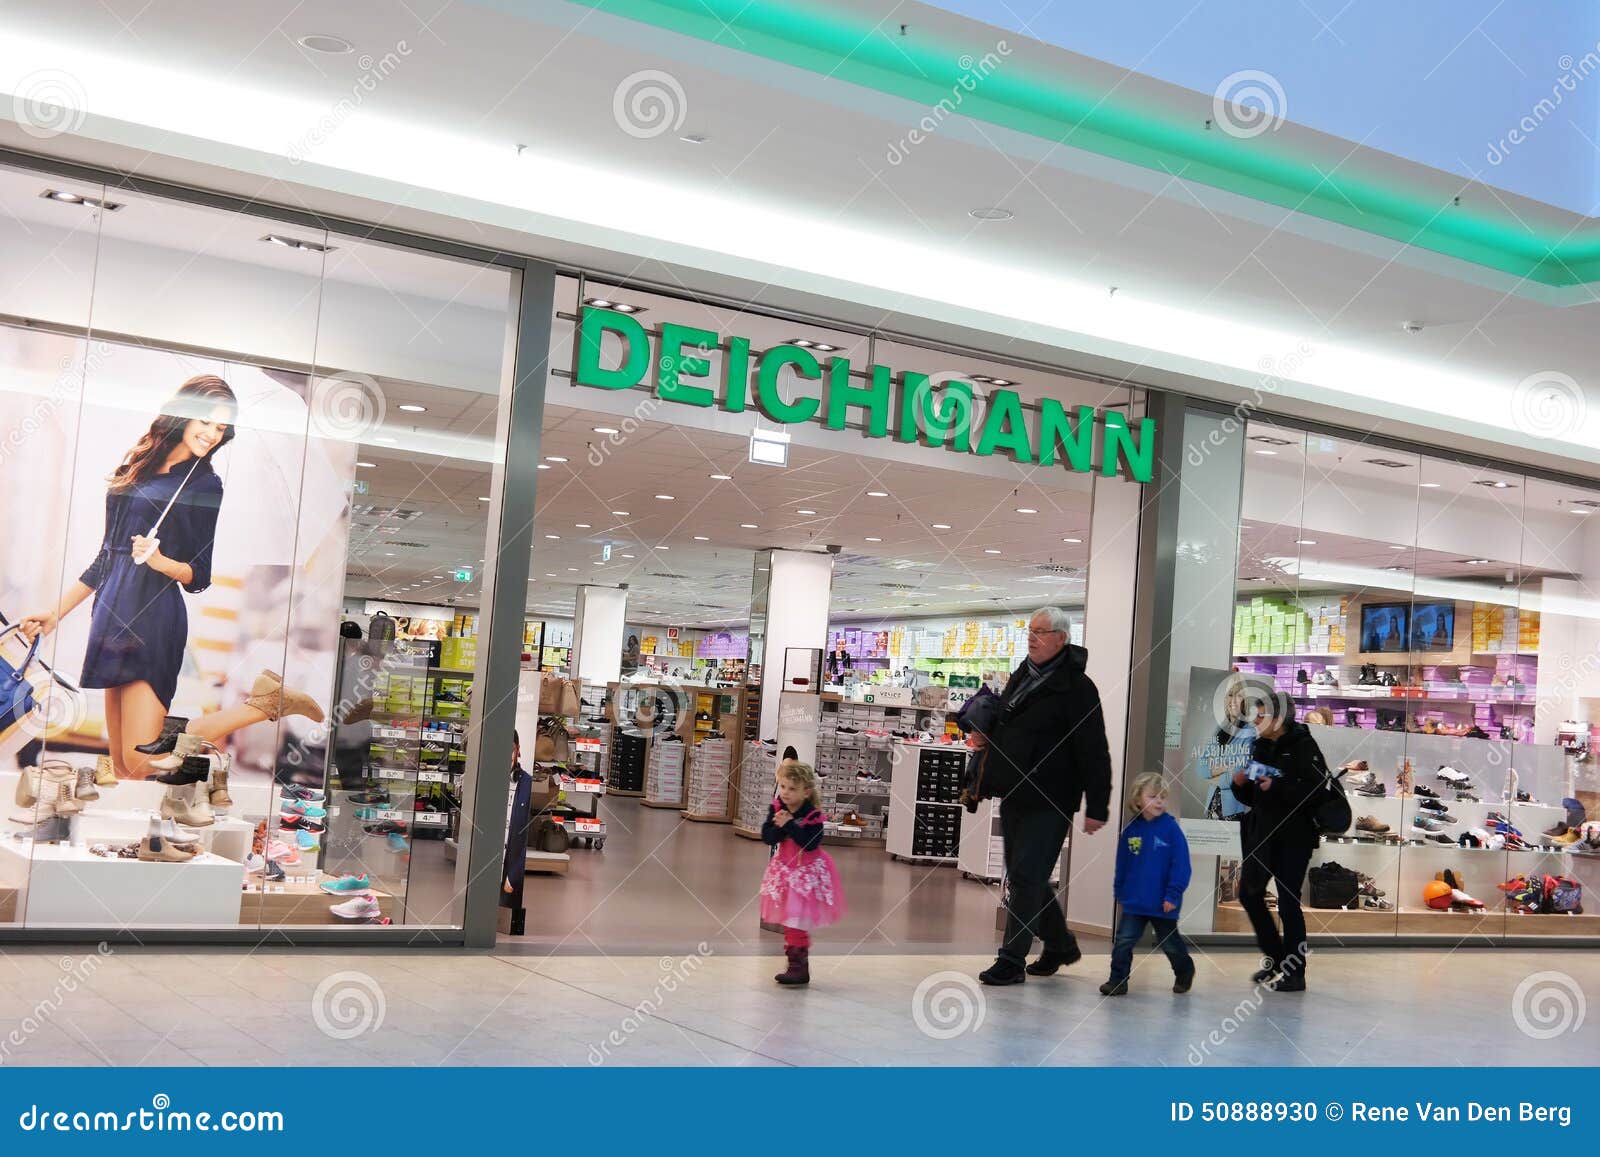 metallisk metallisk bjærgning Deichmann Shoe Store Stock Photos - Free & Royalty-Free Stock Photos from  Dreamstime